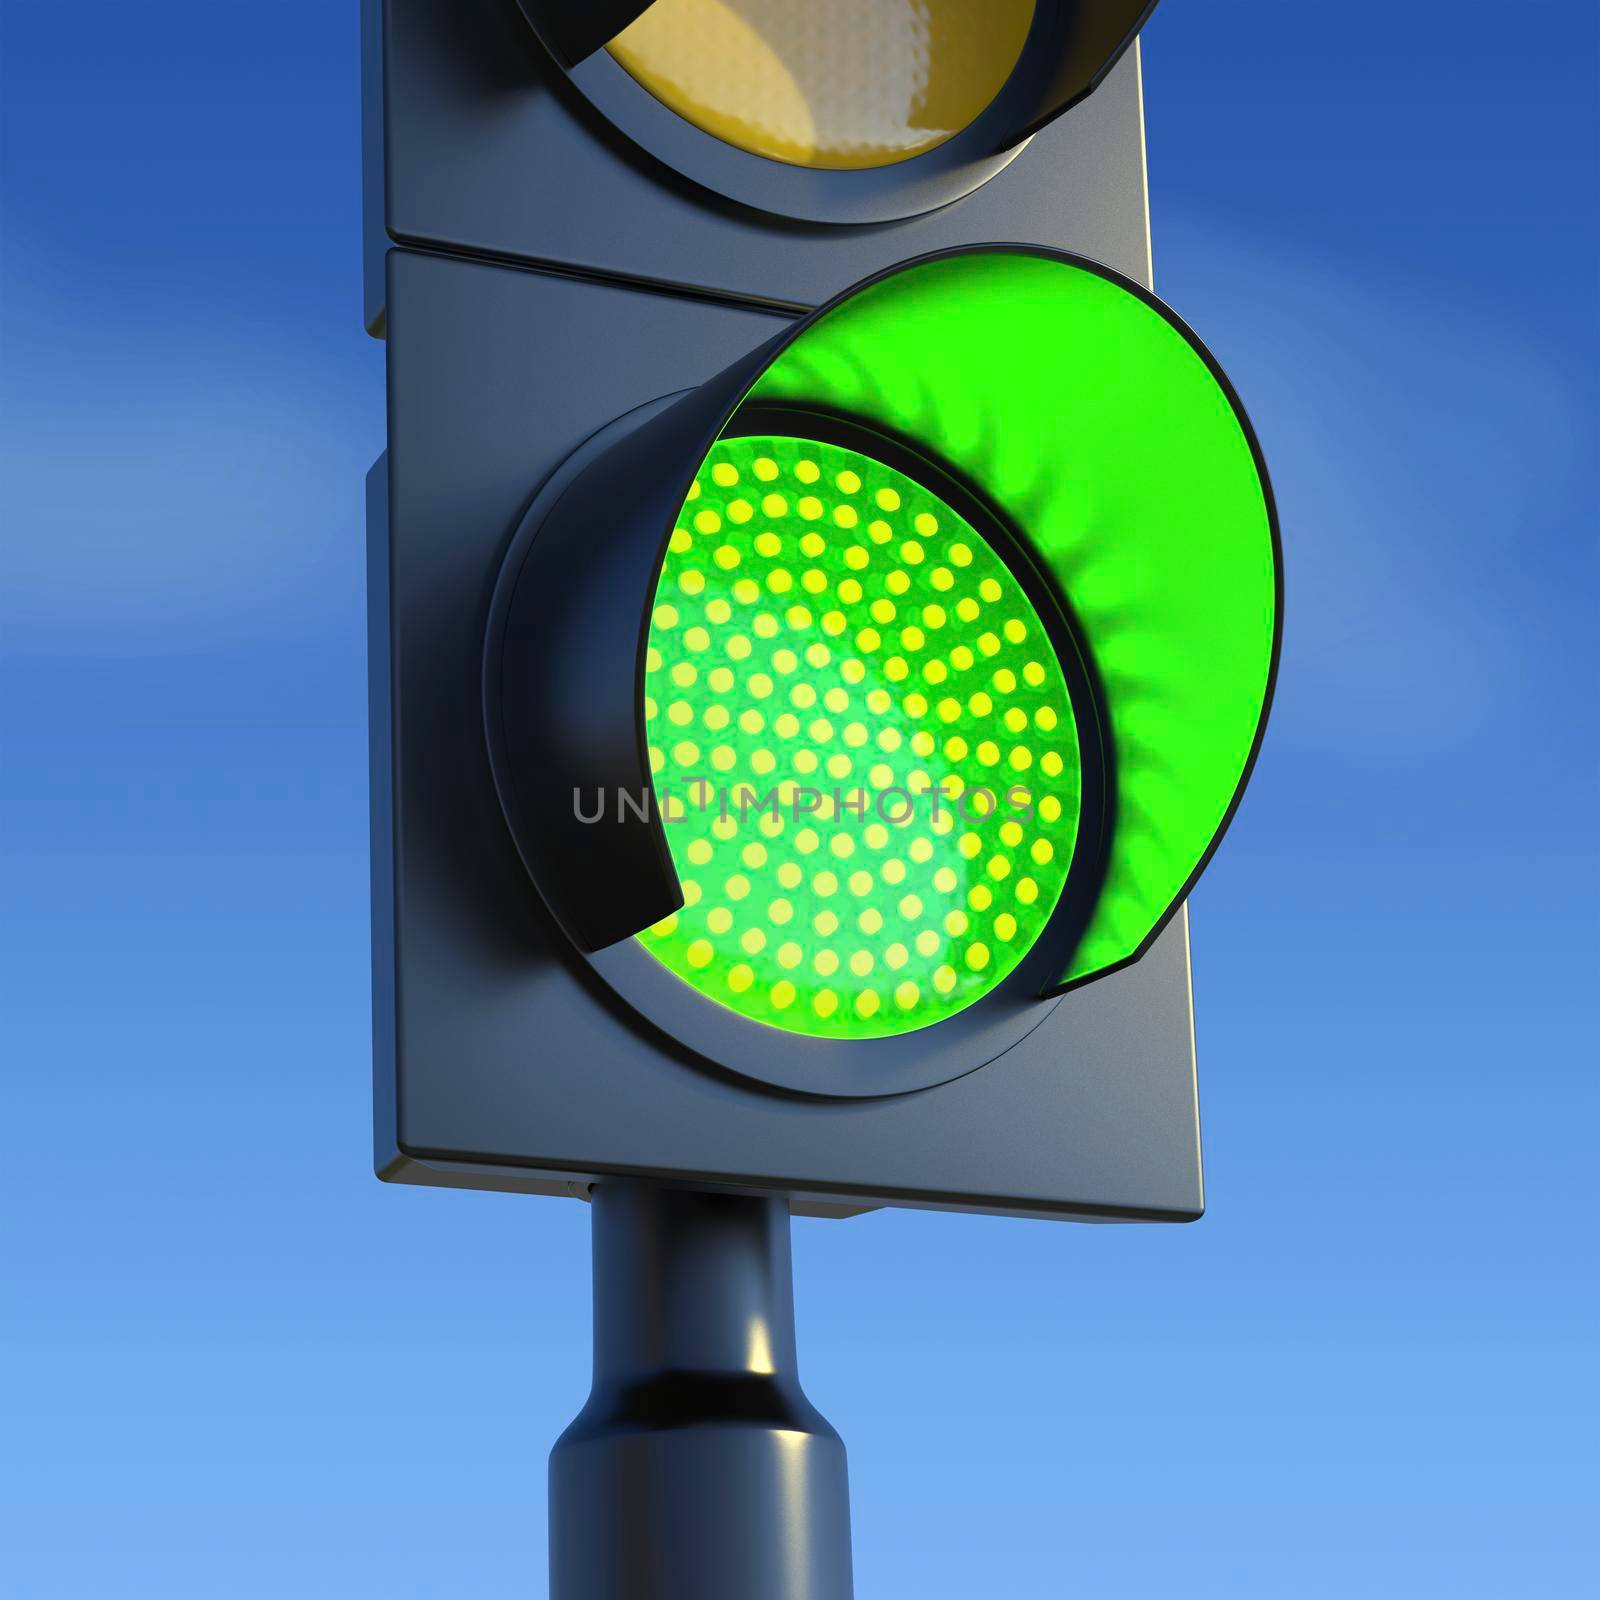 Traffic light with green light on